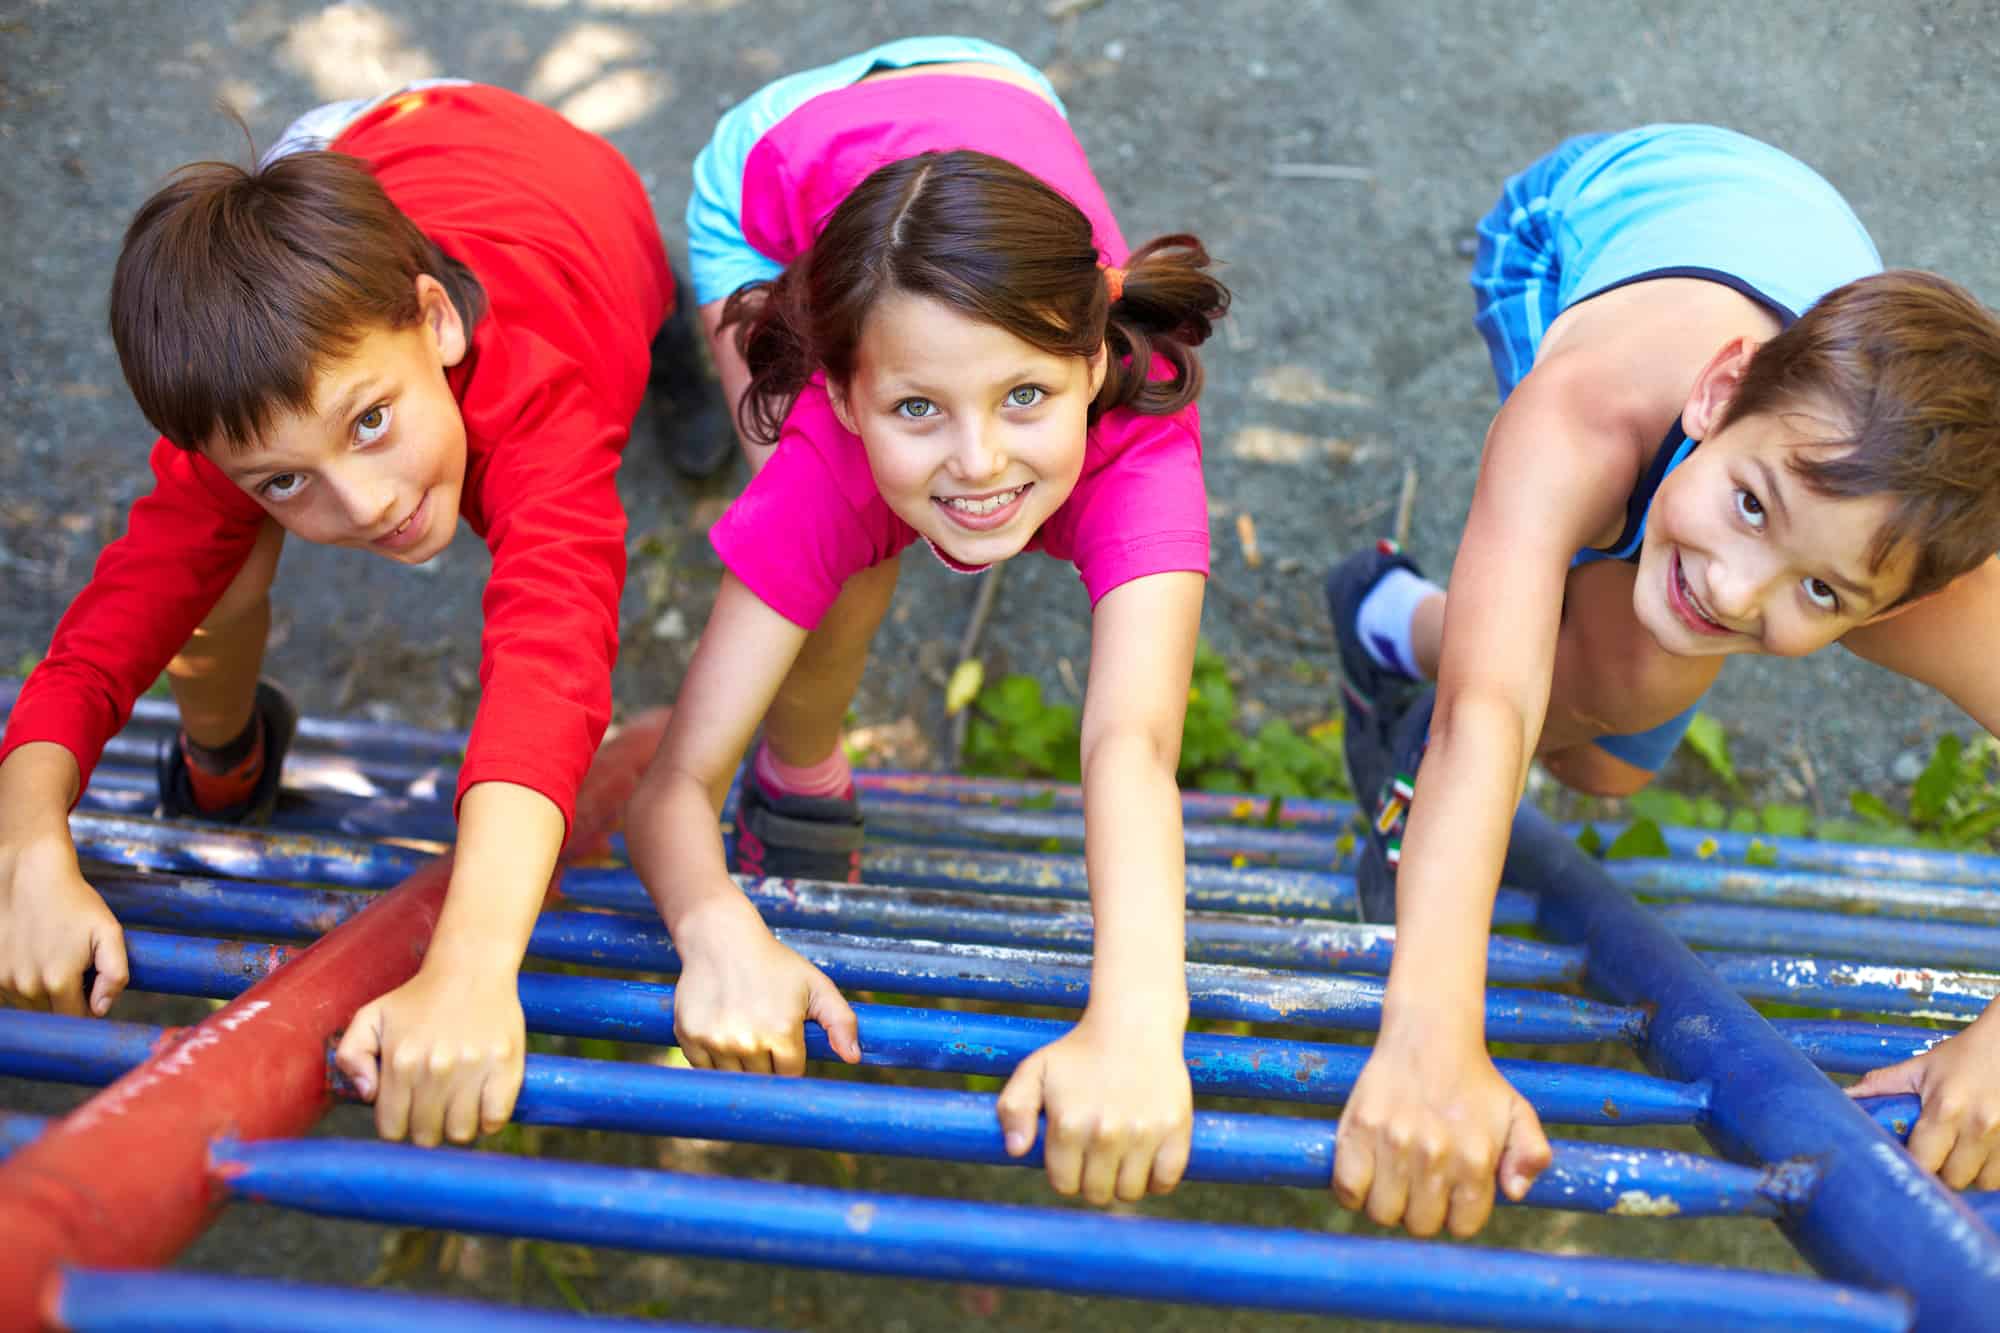 Three kids climbing a ladder at a playground